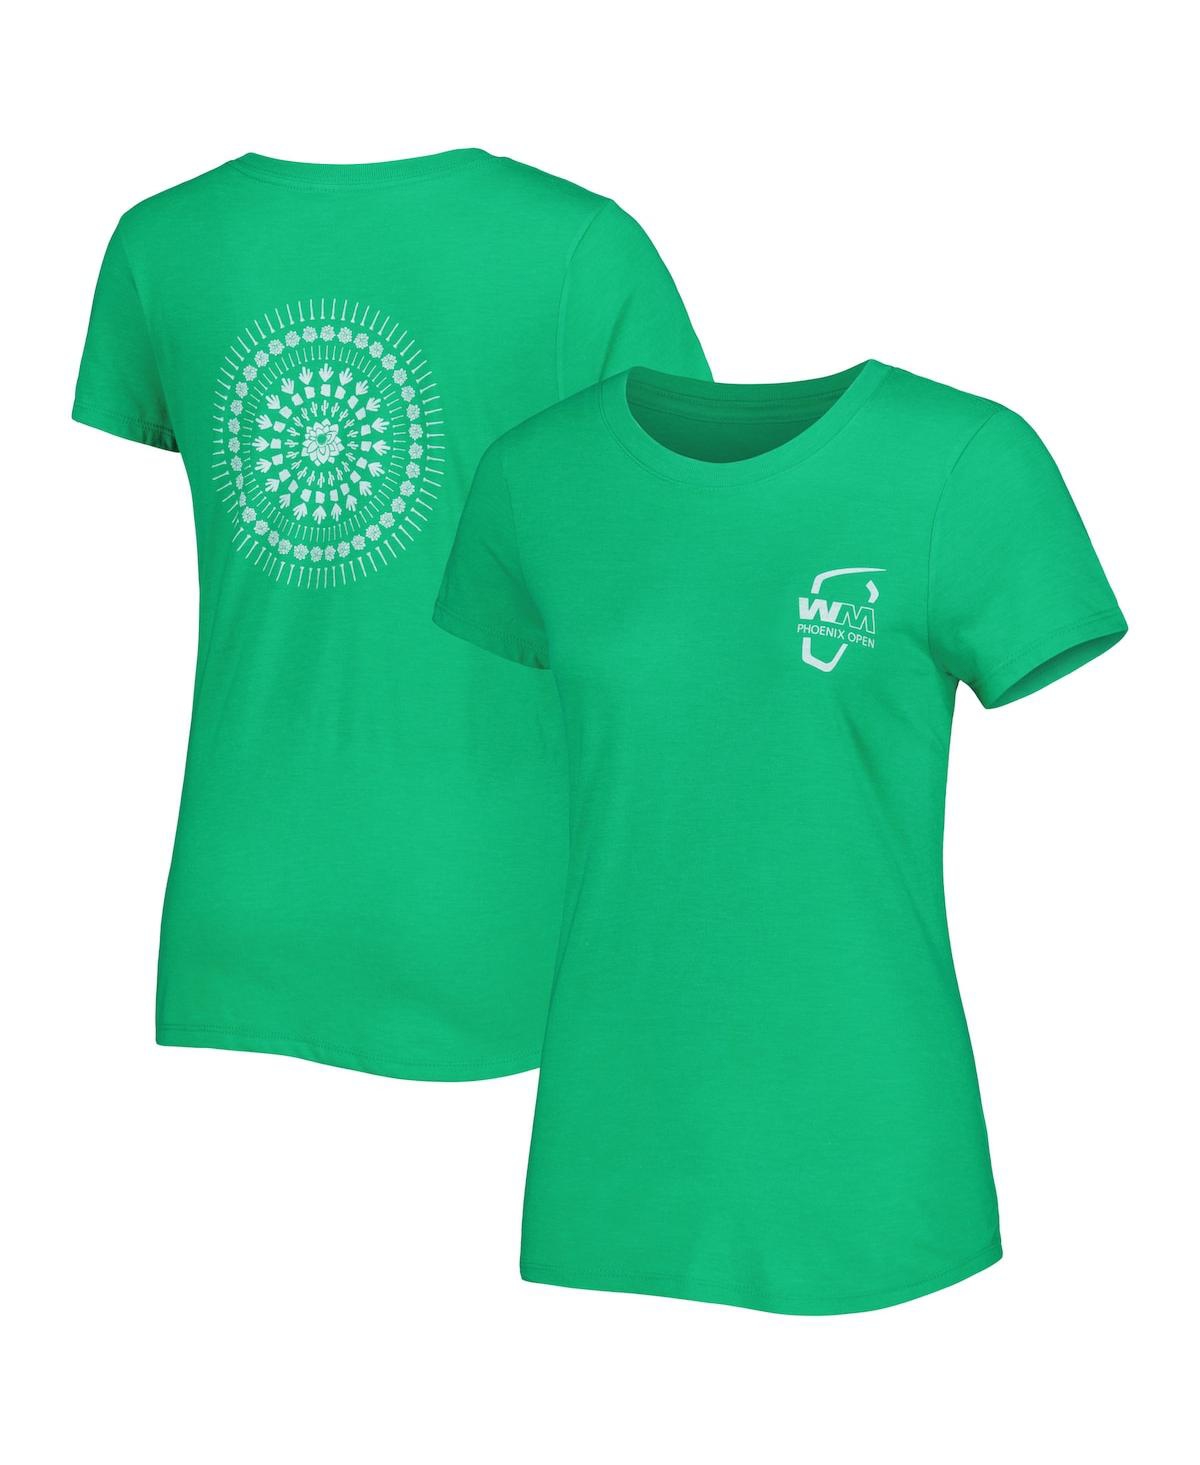 Shop Ahead Women's  Green Wm Phoenix Open Danby Tri-blend T-shirt